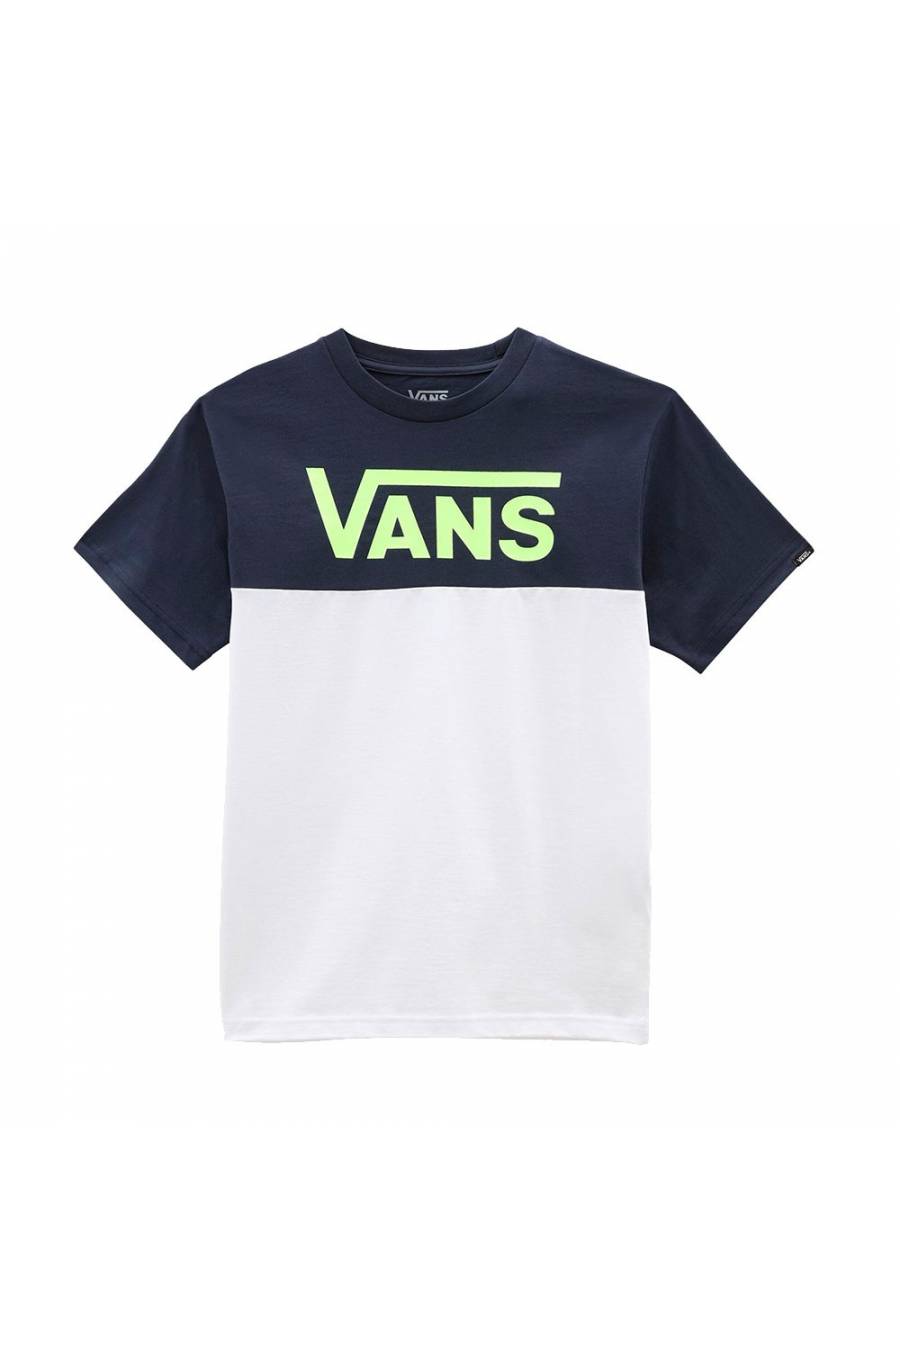 cáustico Costoso oxígeno Camiseta Vans Classic Block VN0A7SH75S21 - msdsport